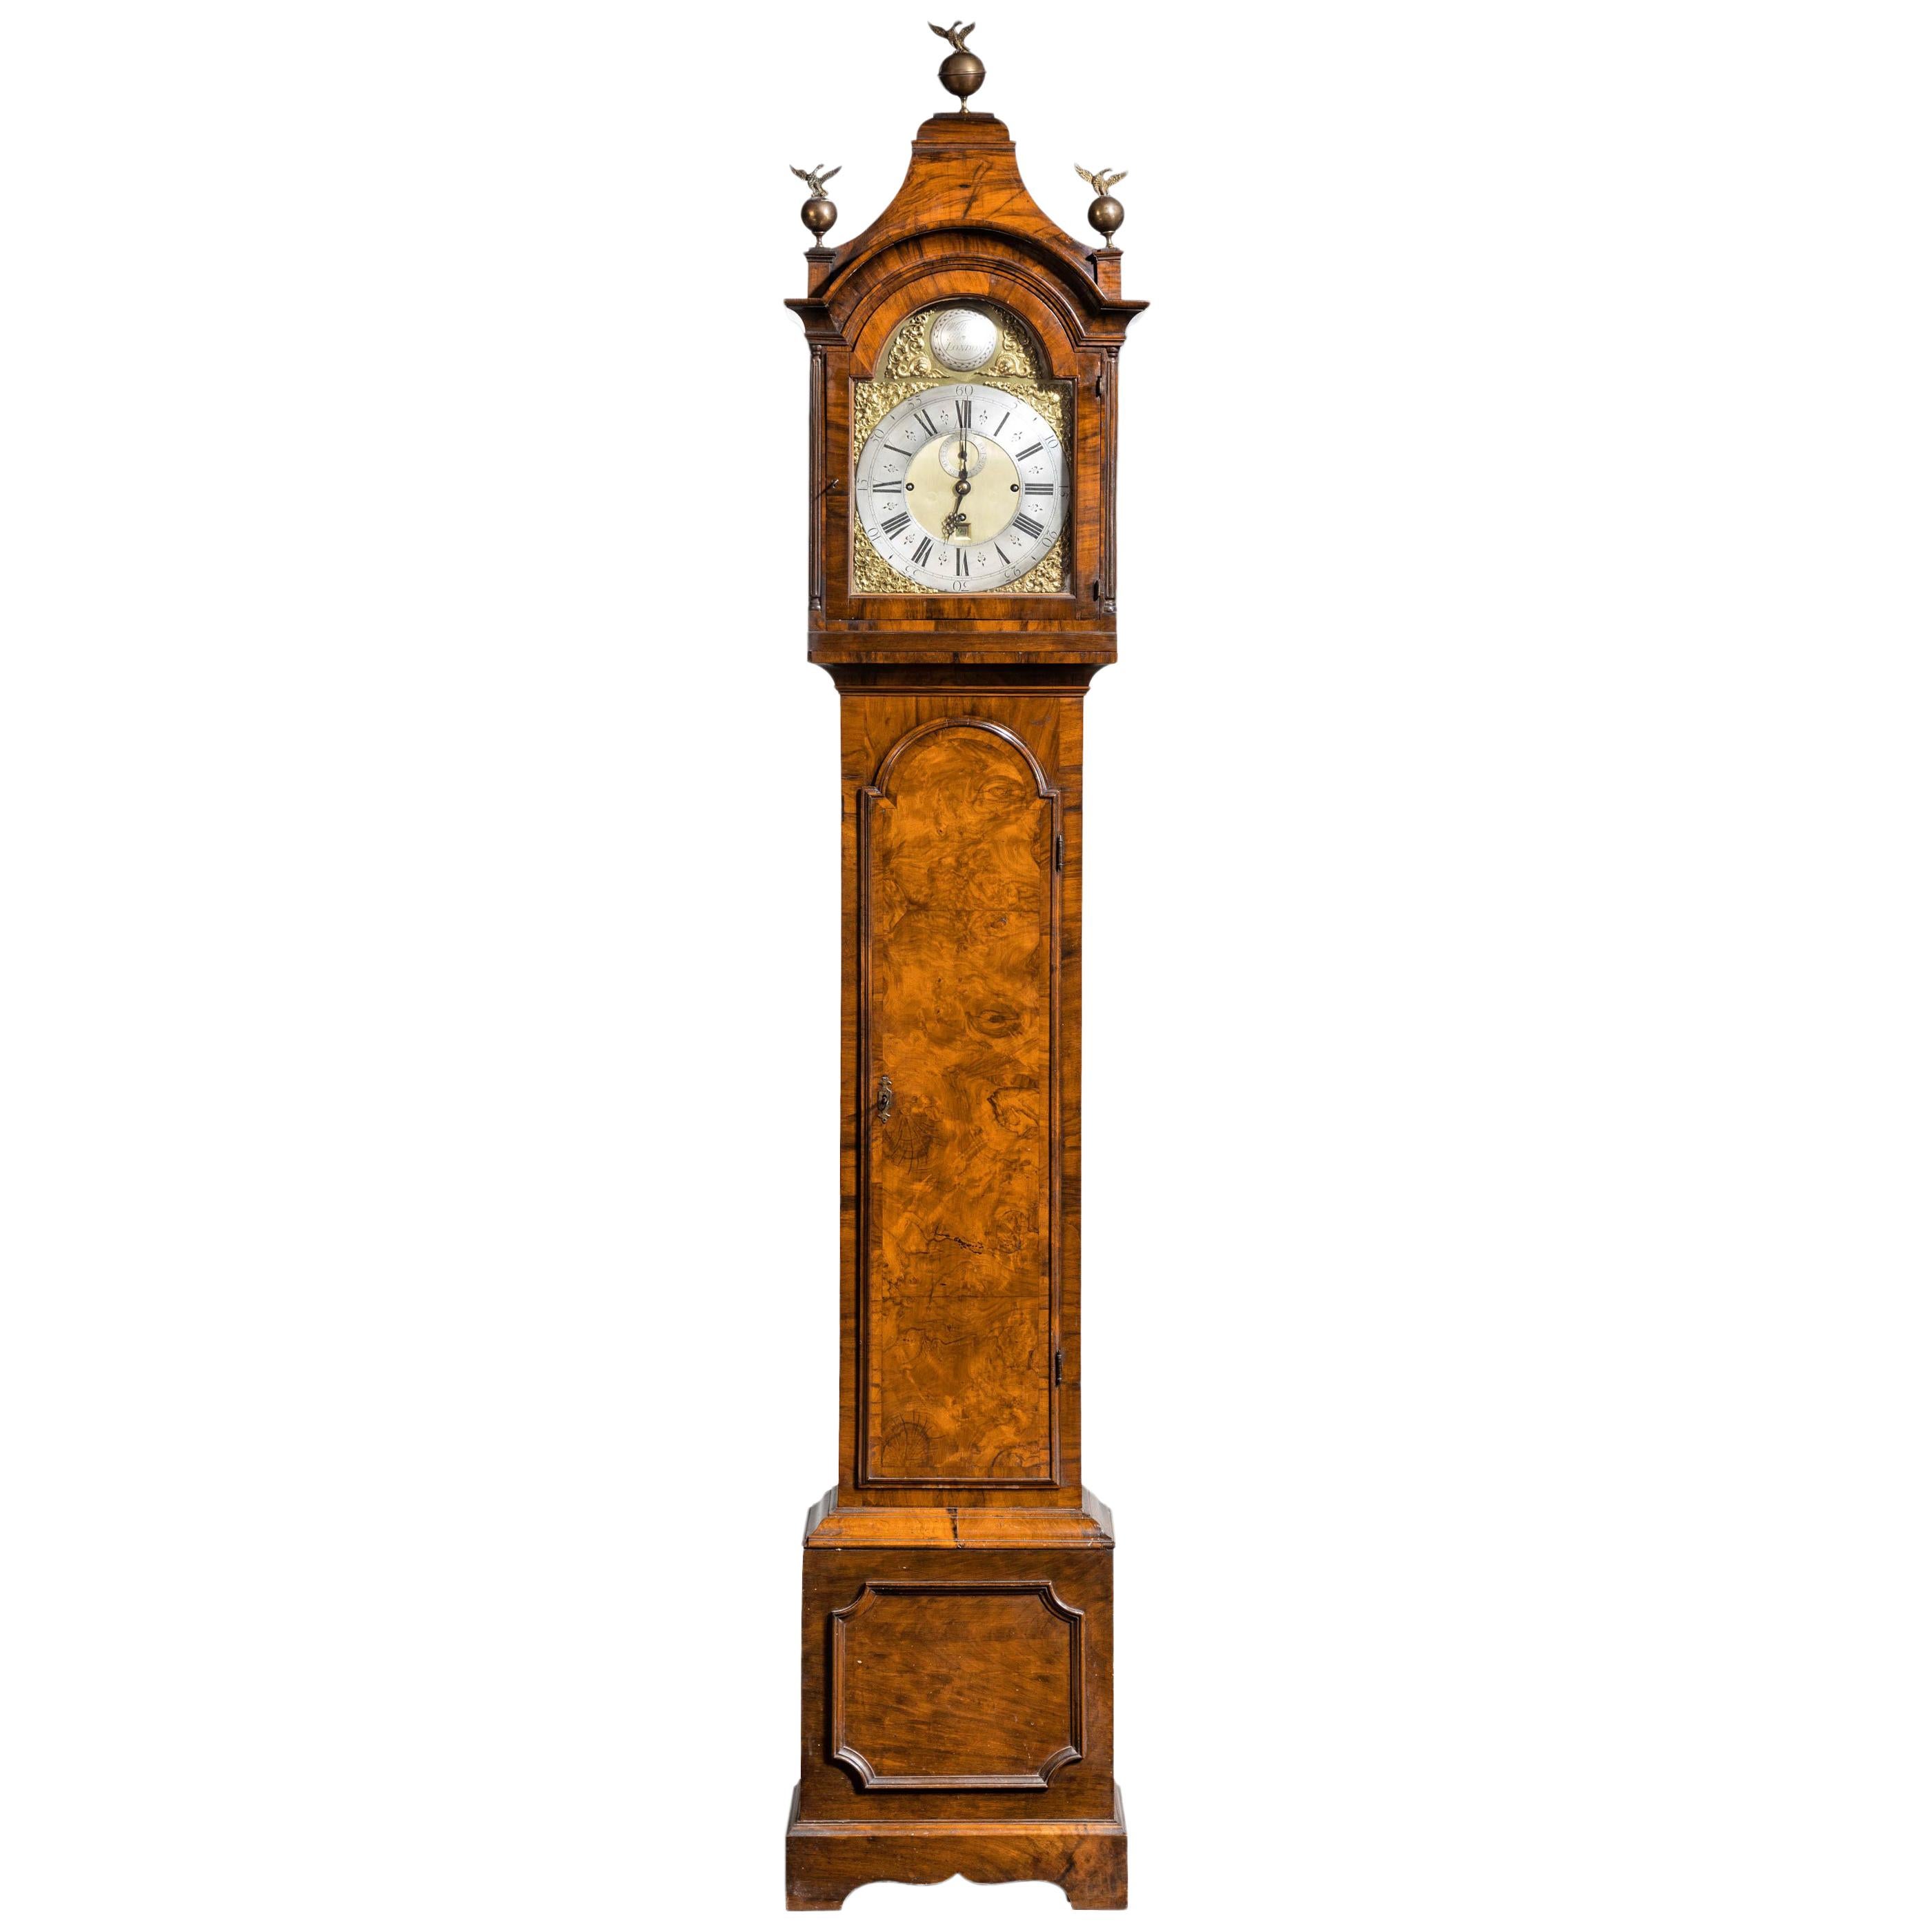 An Unusual, George III Period, Longcase Clock in Walnut Engraved William Harris